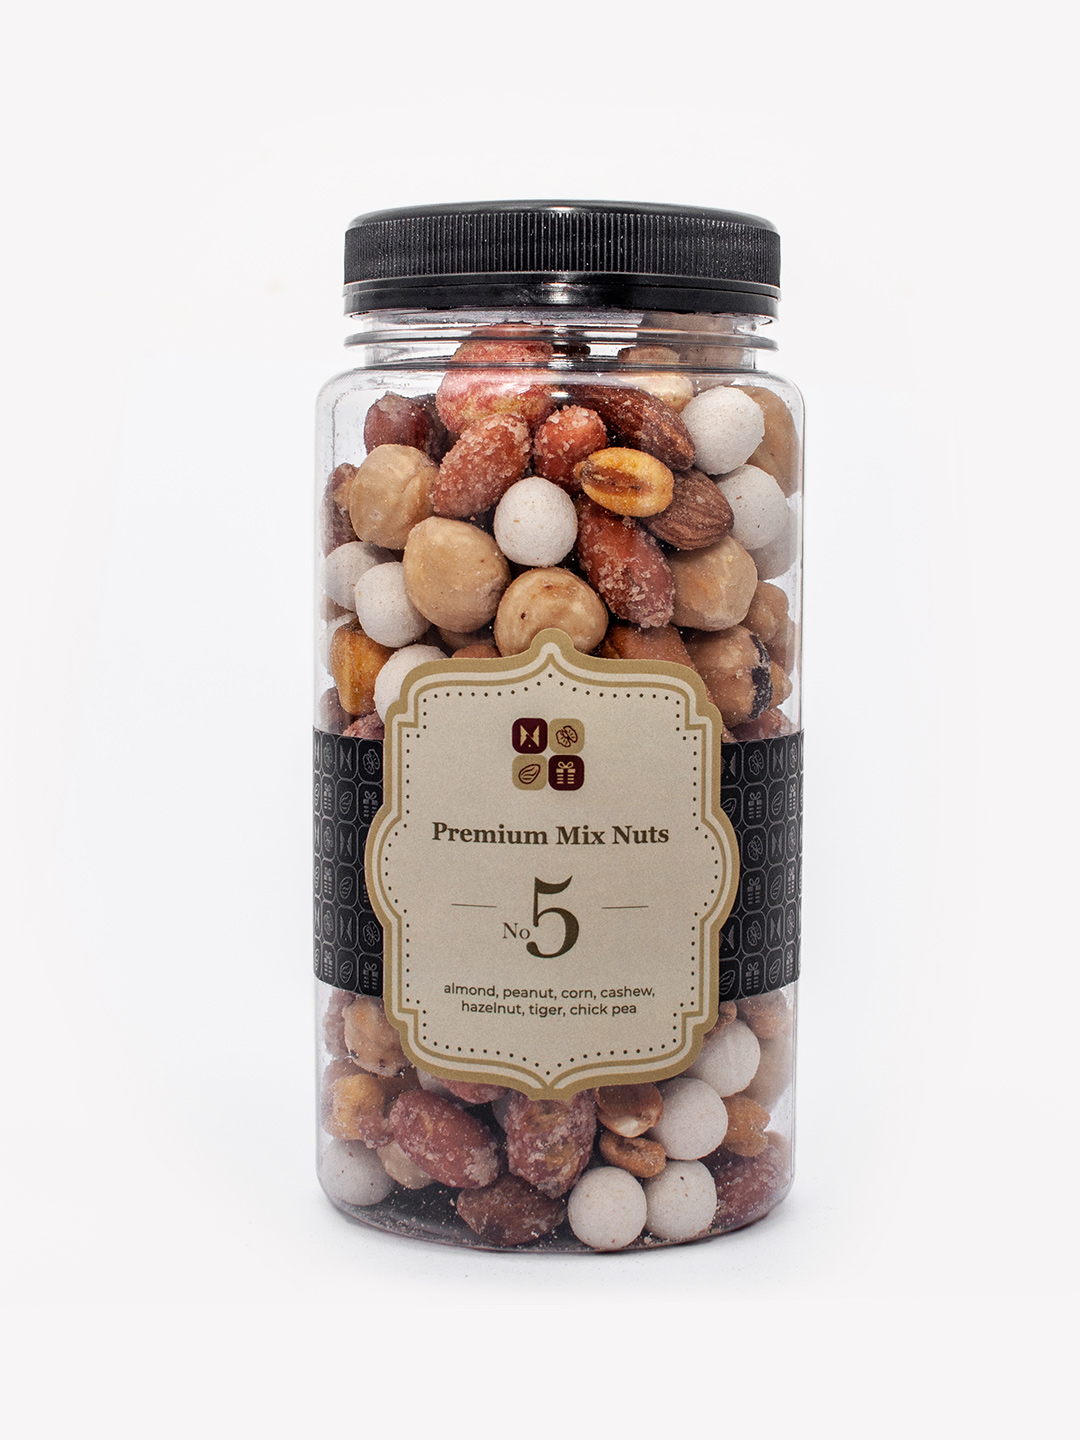 Premium Mix Nuts cashew almond peanuts hazelnuts chickpeas